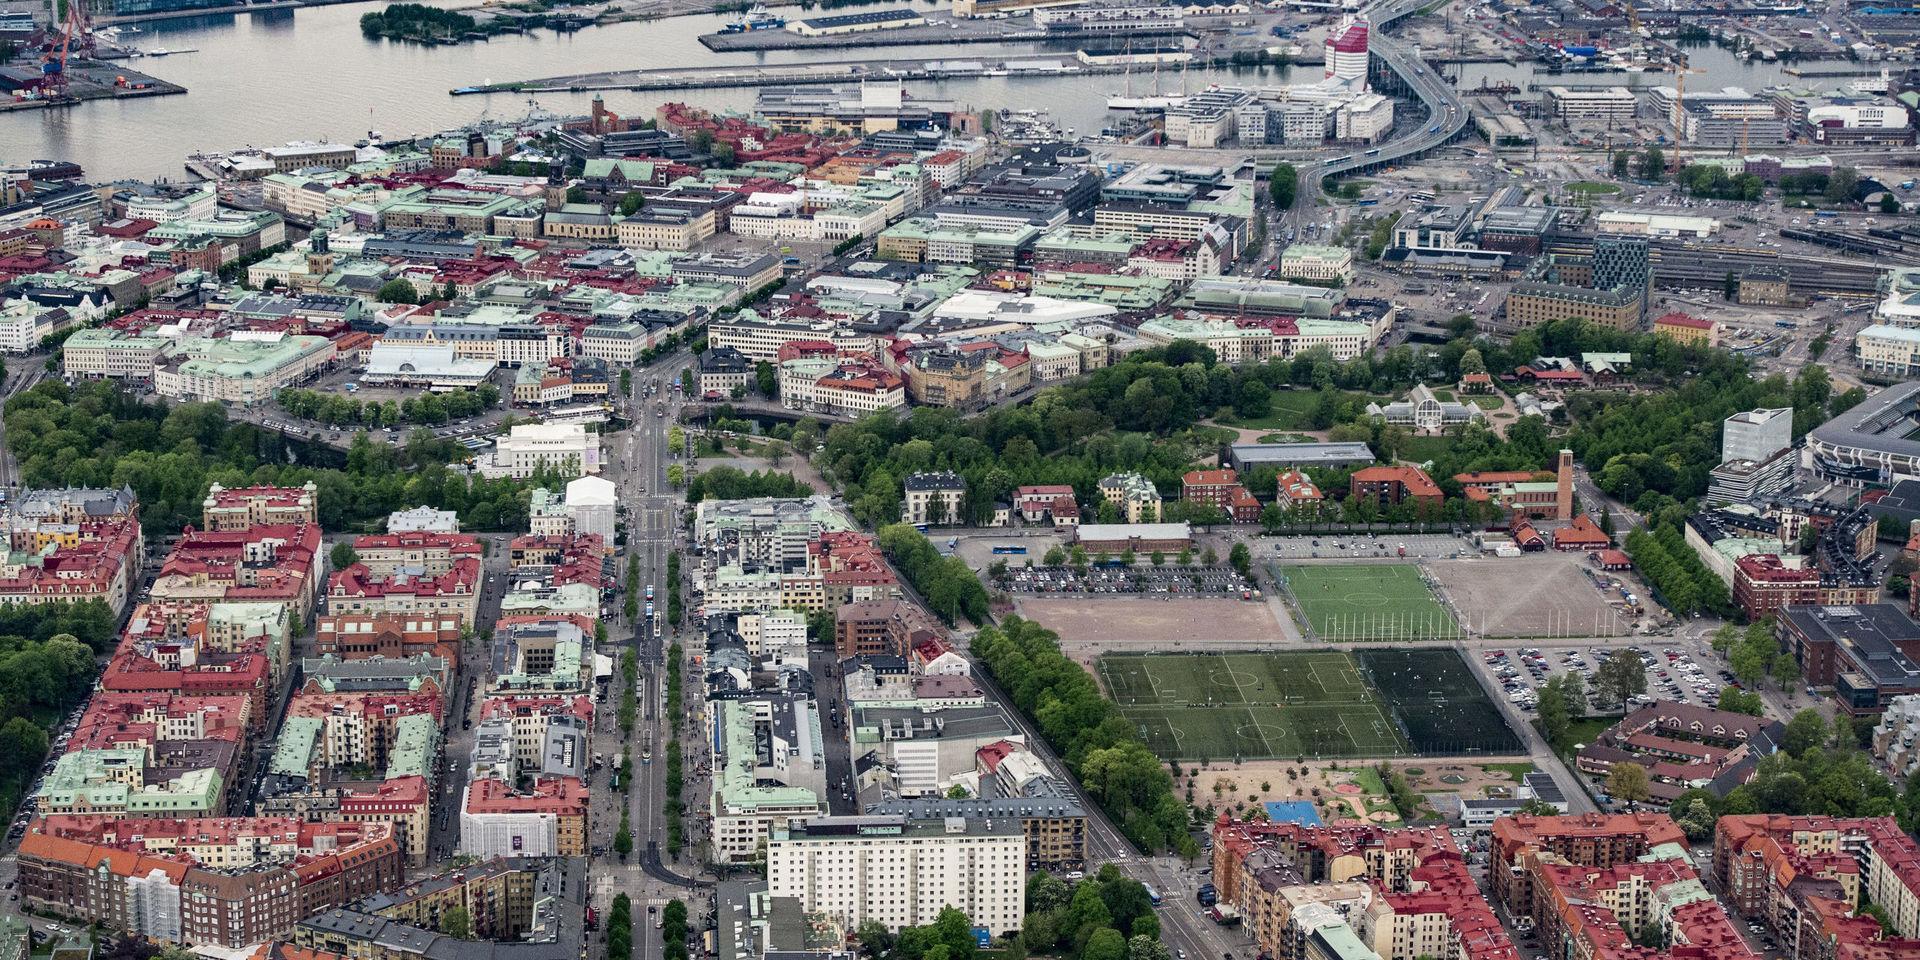 Priset på dyrare bostadsrätter i centrala Göteborg stiger just nu mest, enligt Valueguard.